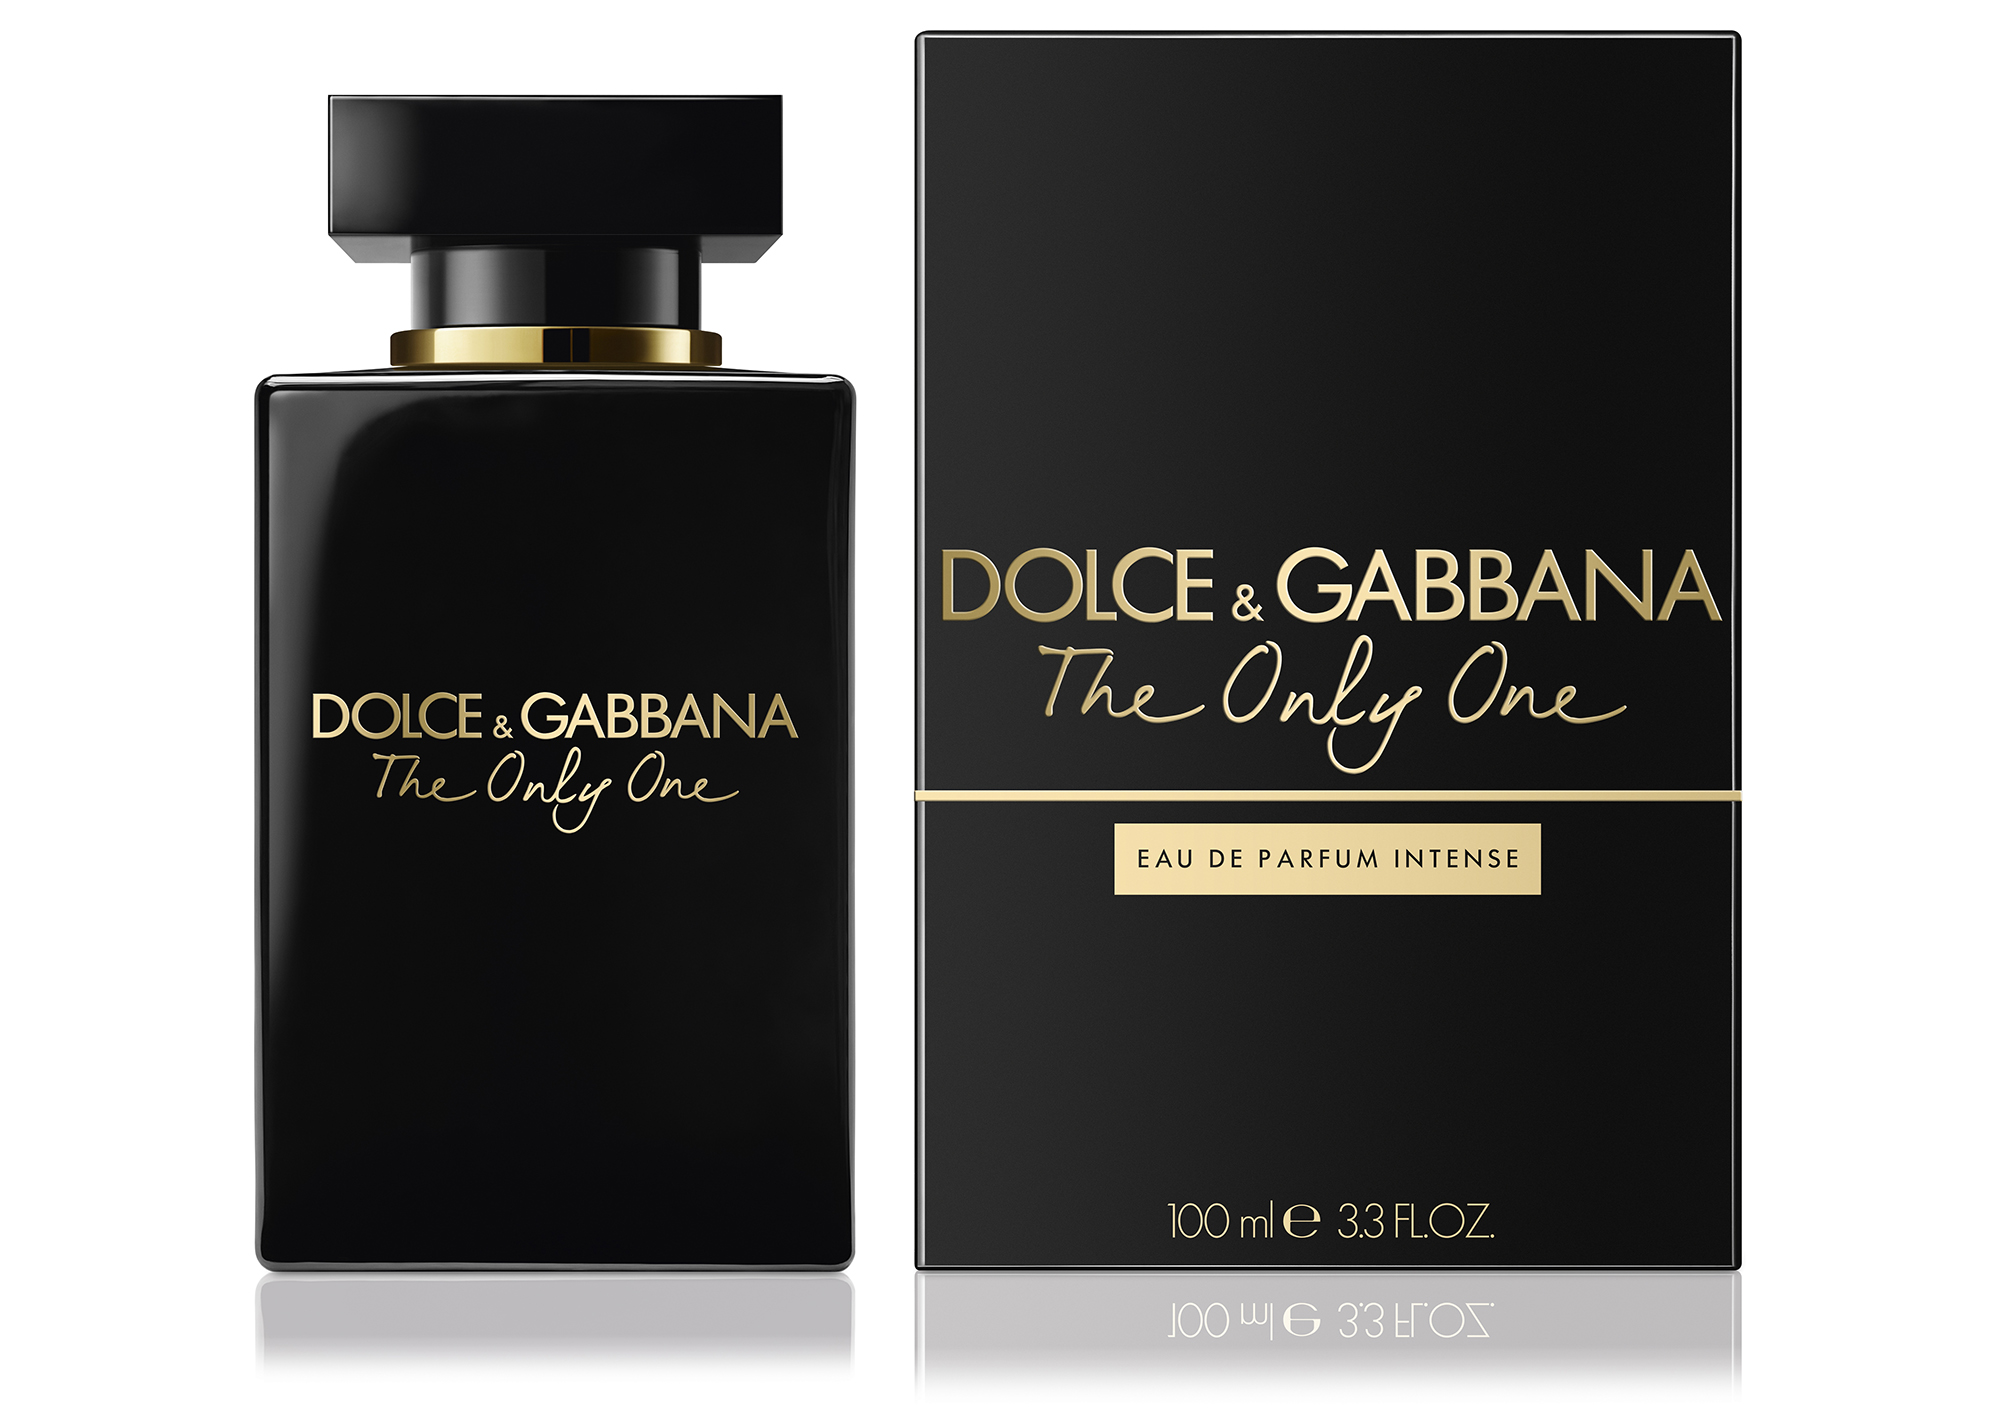 Parfum Dolce & Gabbana - Homecare24